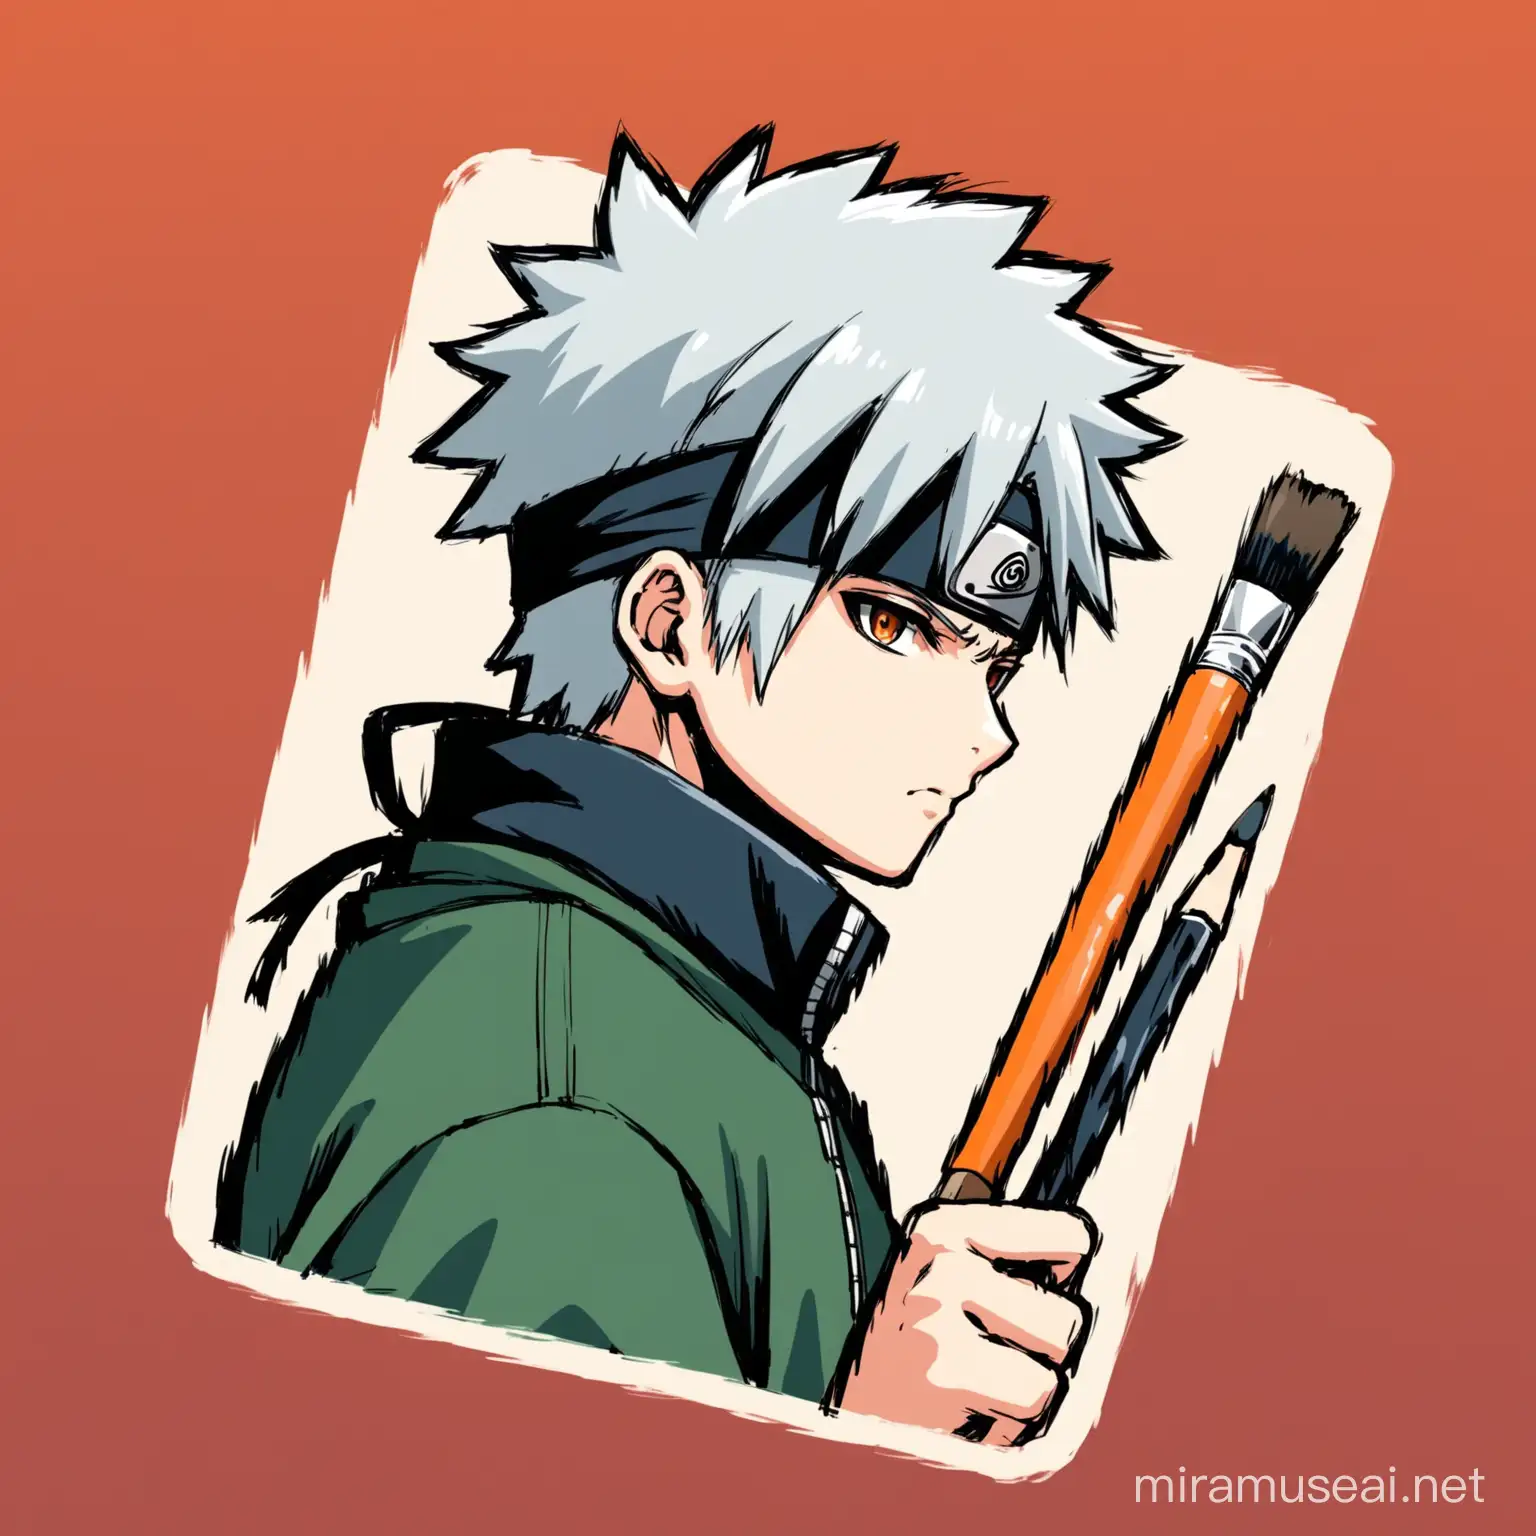 Kakashi Hatake Holding Drawing Pencils Iconic Naruto Character as Artistic Logo